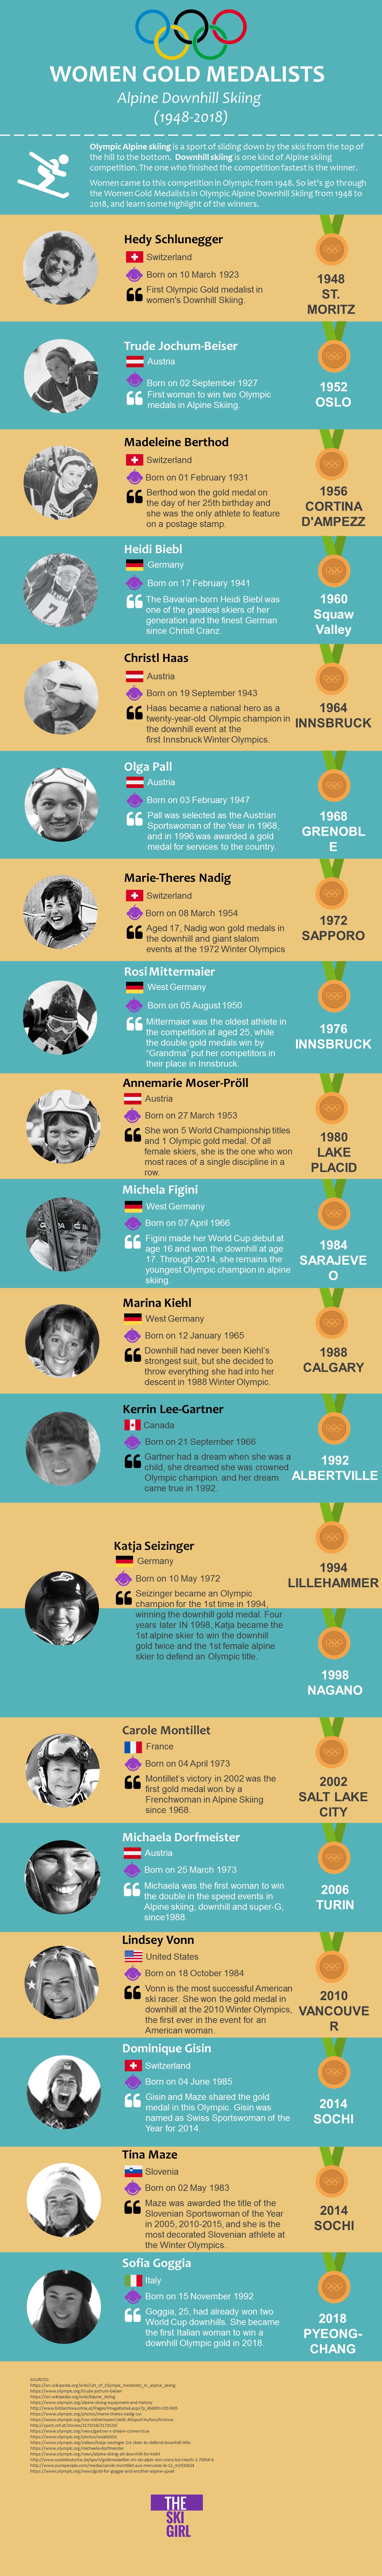 Infografía de 19 mujeres medallistas de oro olímpicas (1948 a 2018)